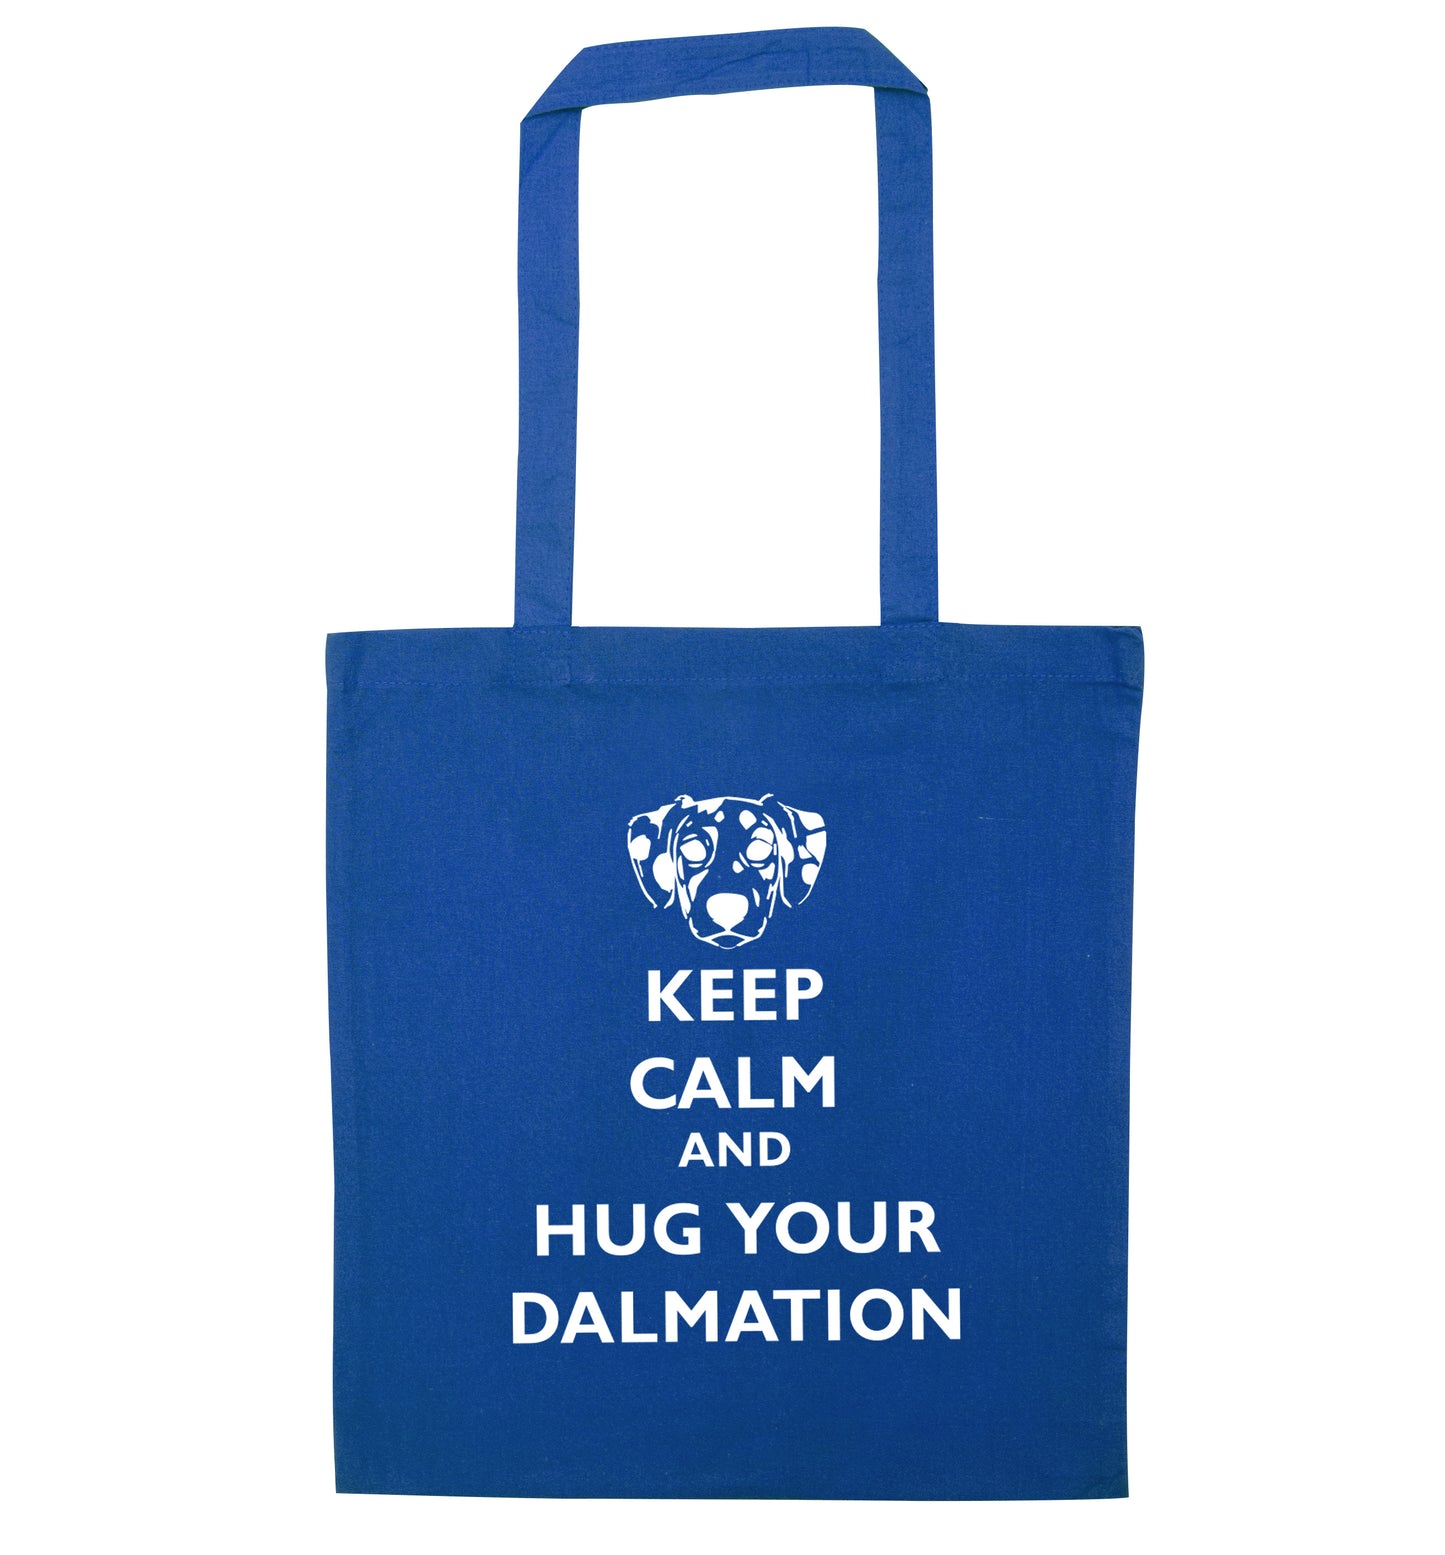 Keep calm and hug your dalmation blue tote bag